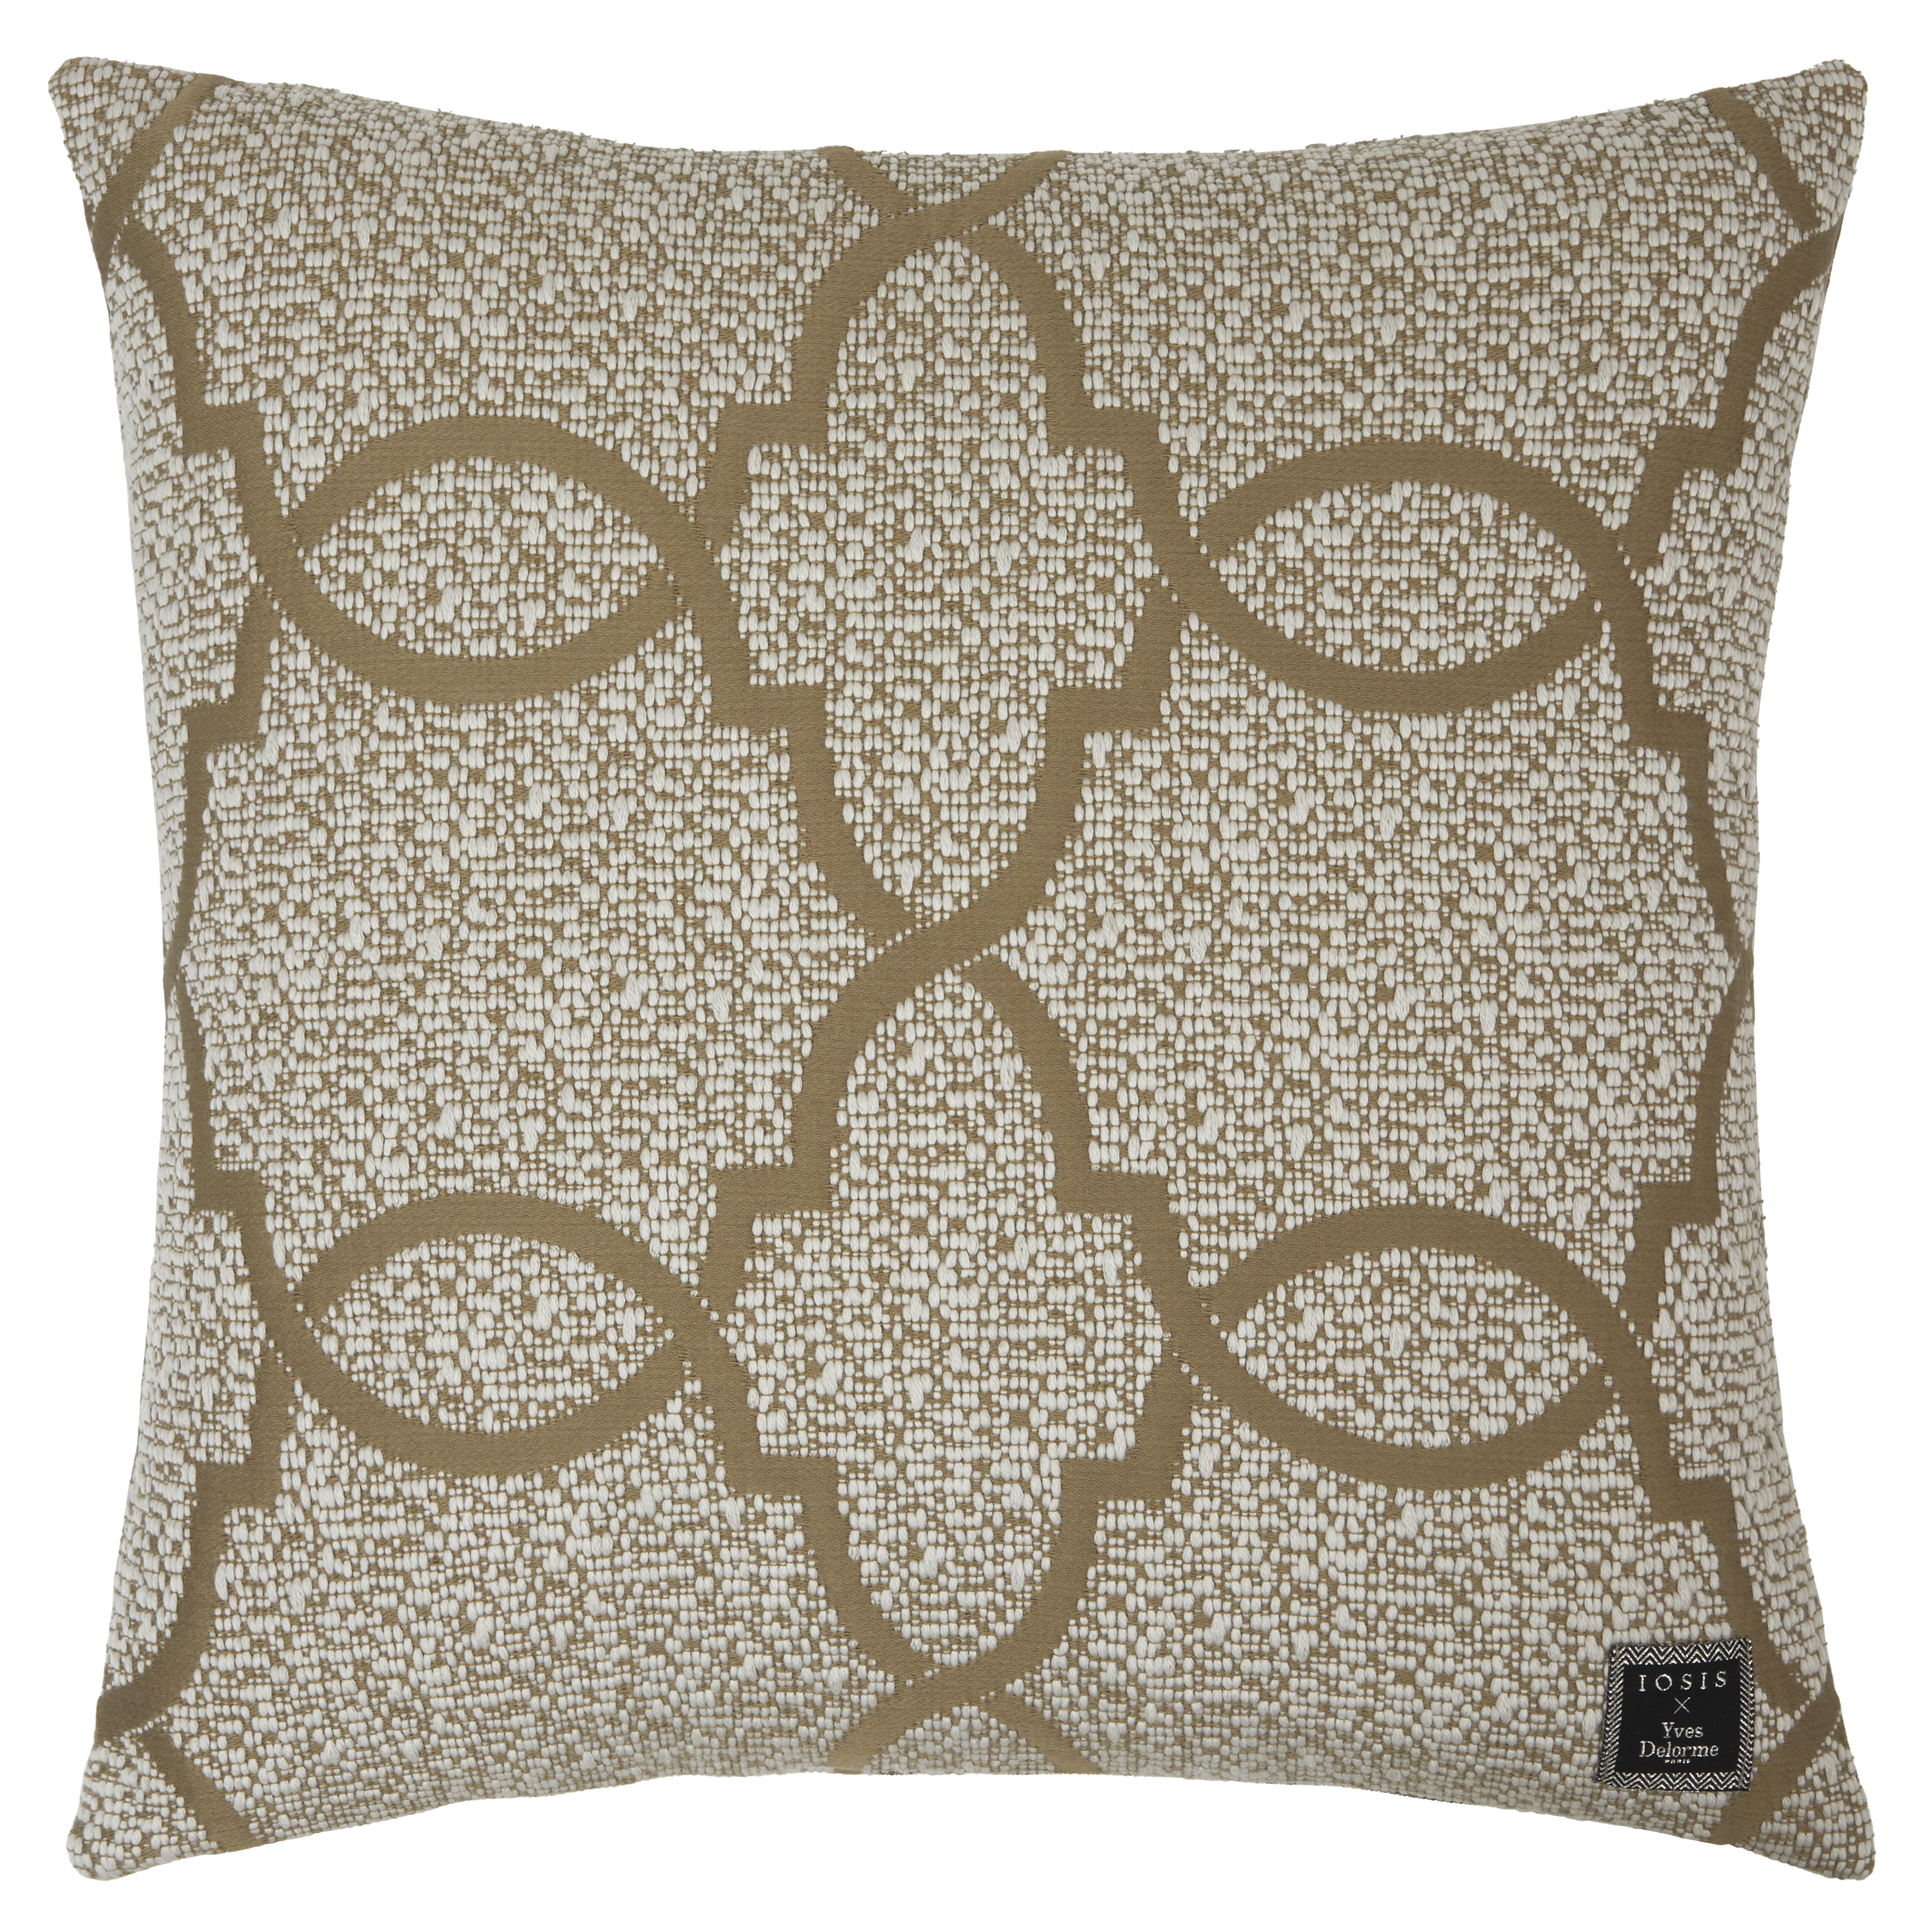 Yves Delorme Logo Decorative Pillow